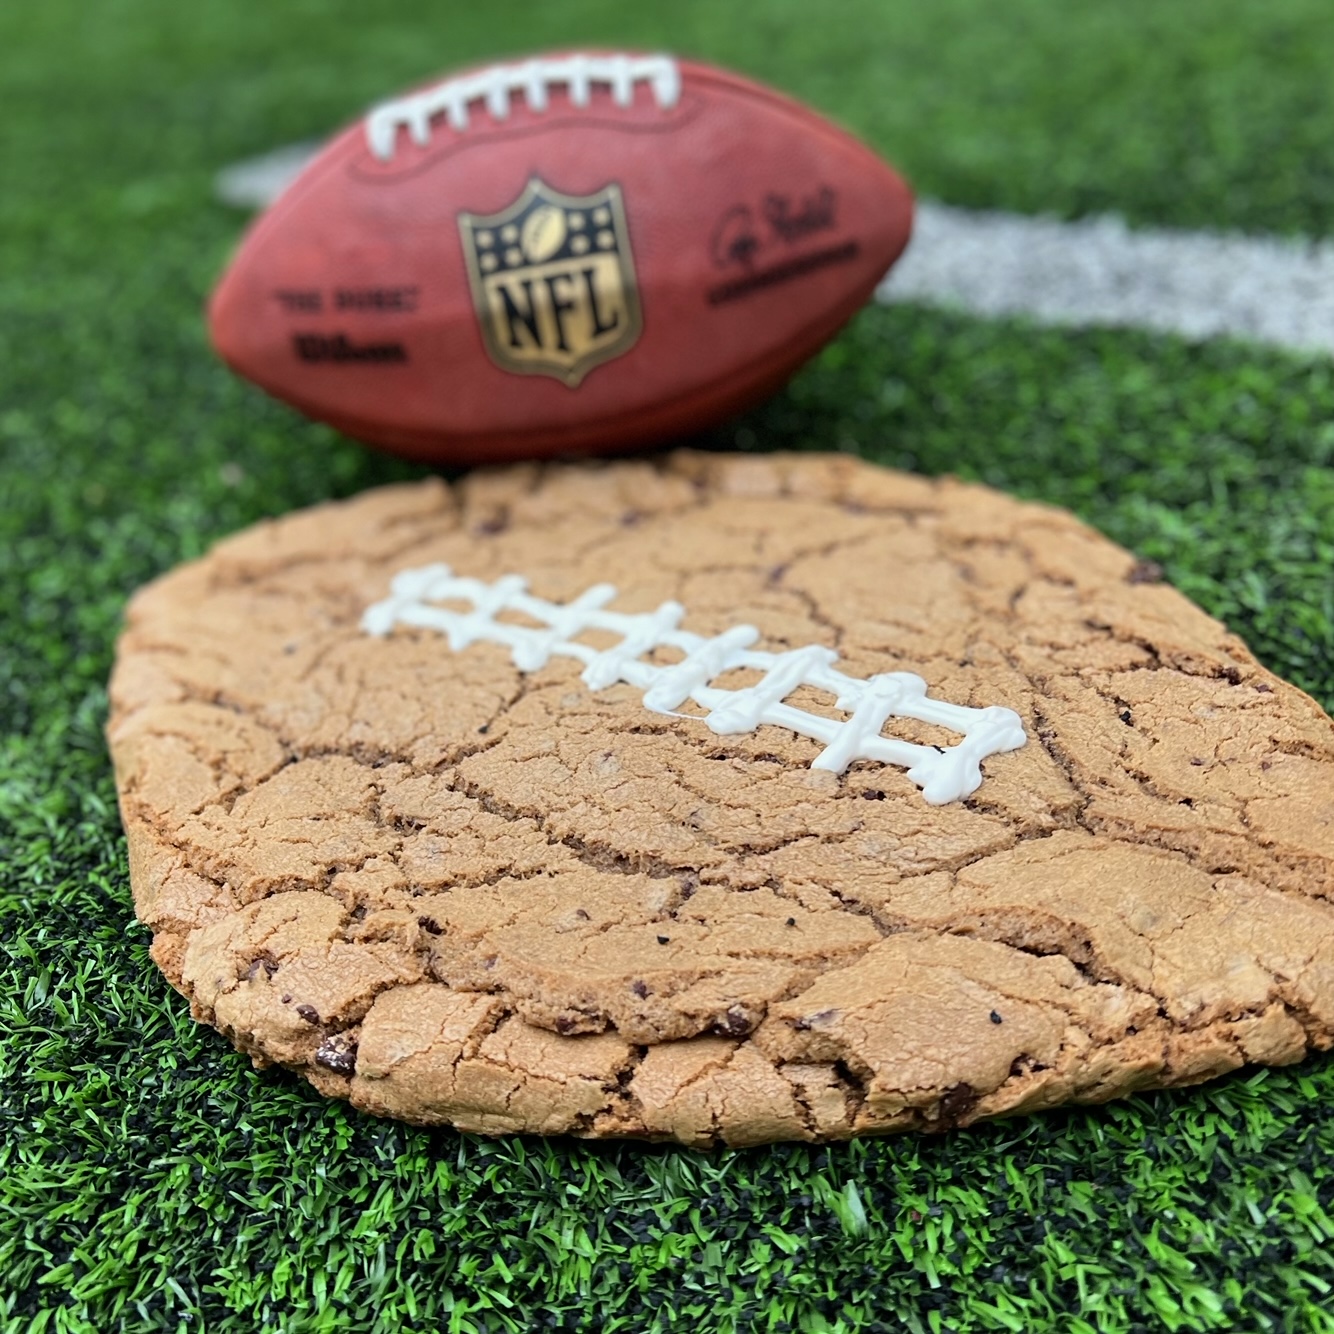 Trex Cookie Football on Field